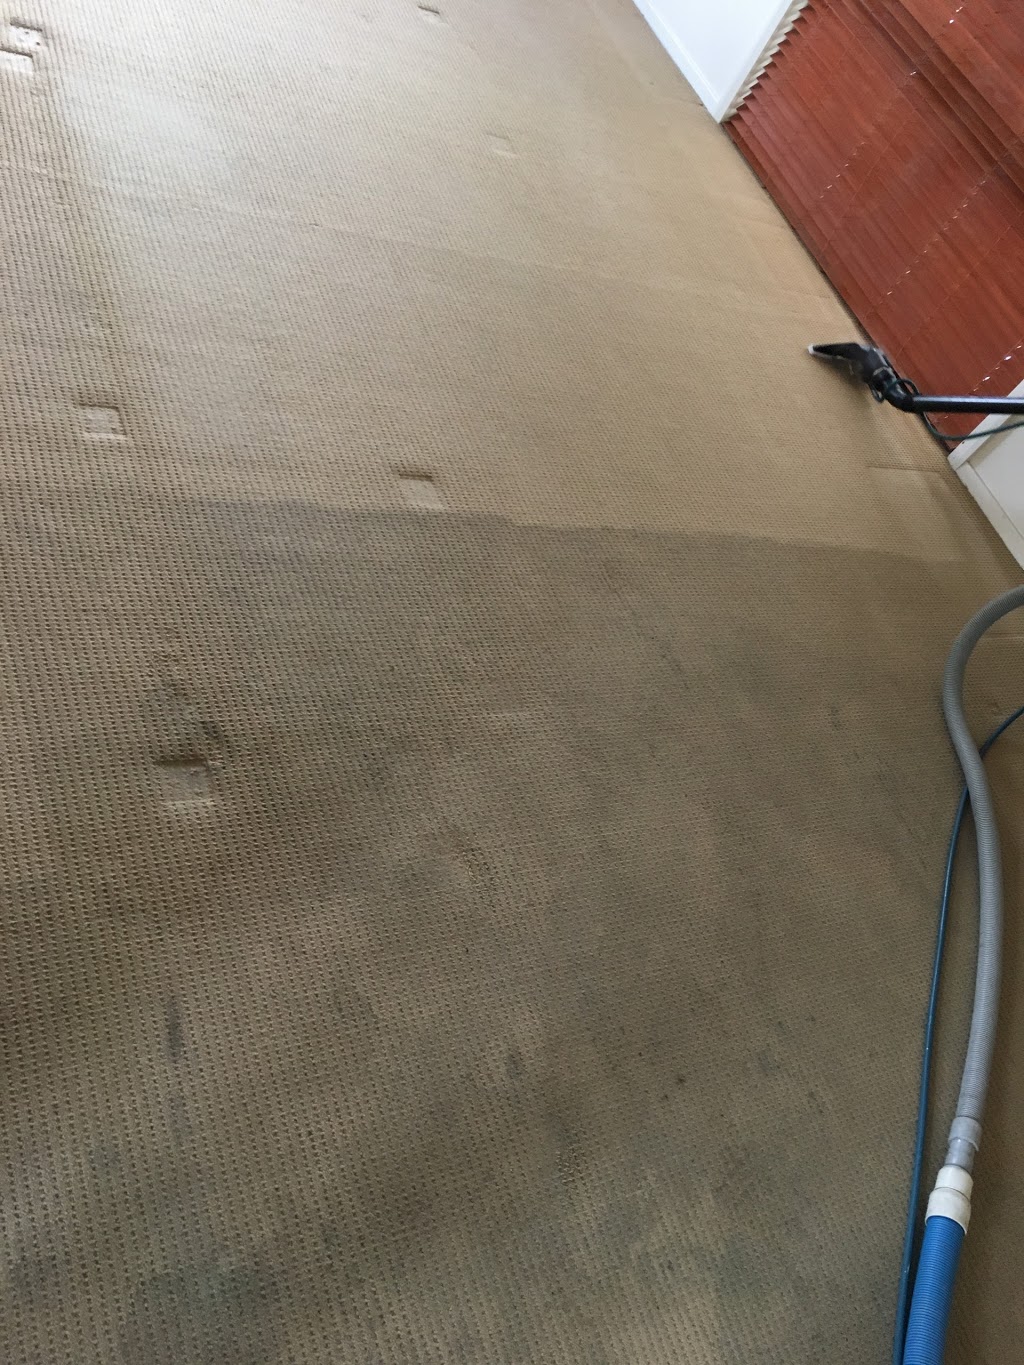 Wokkas Carpet Cleaning - Shepparton Carpet Cleaning | laundry | 21 Graeme St, Mooroopna VIC 3629, Australia | 0412408422 OR +61 412 408 422